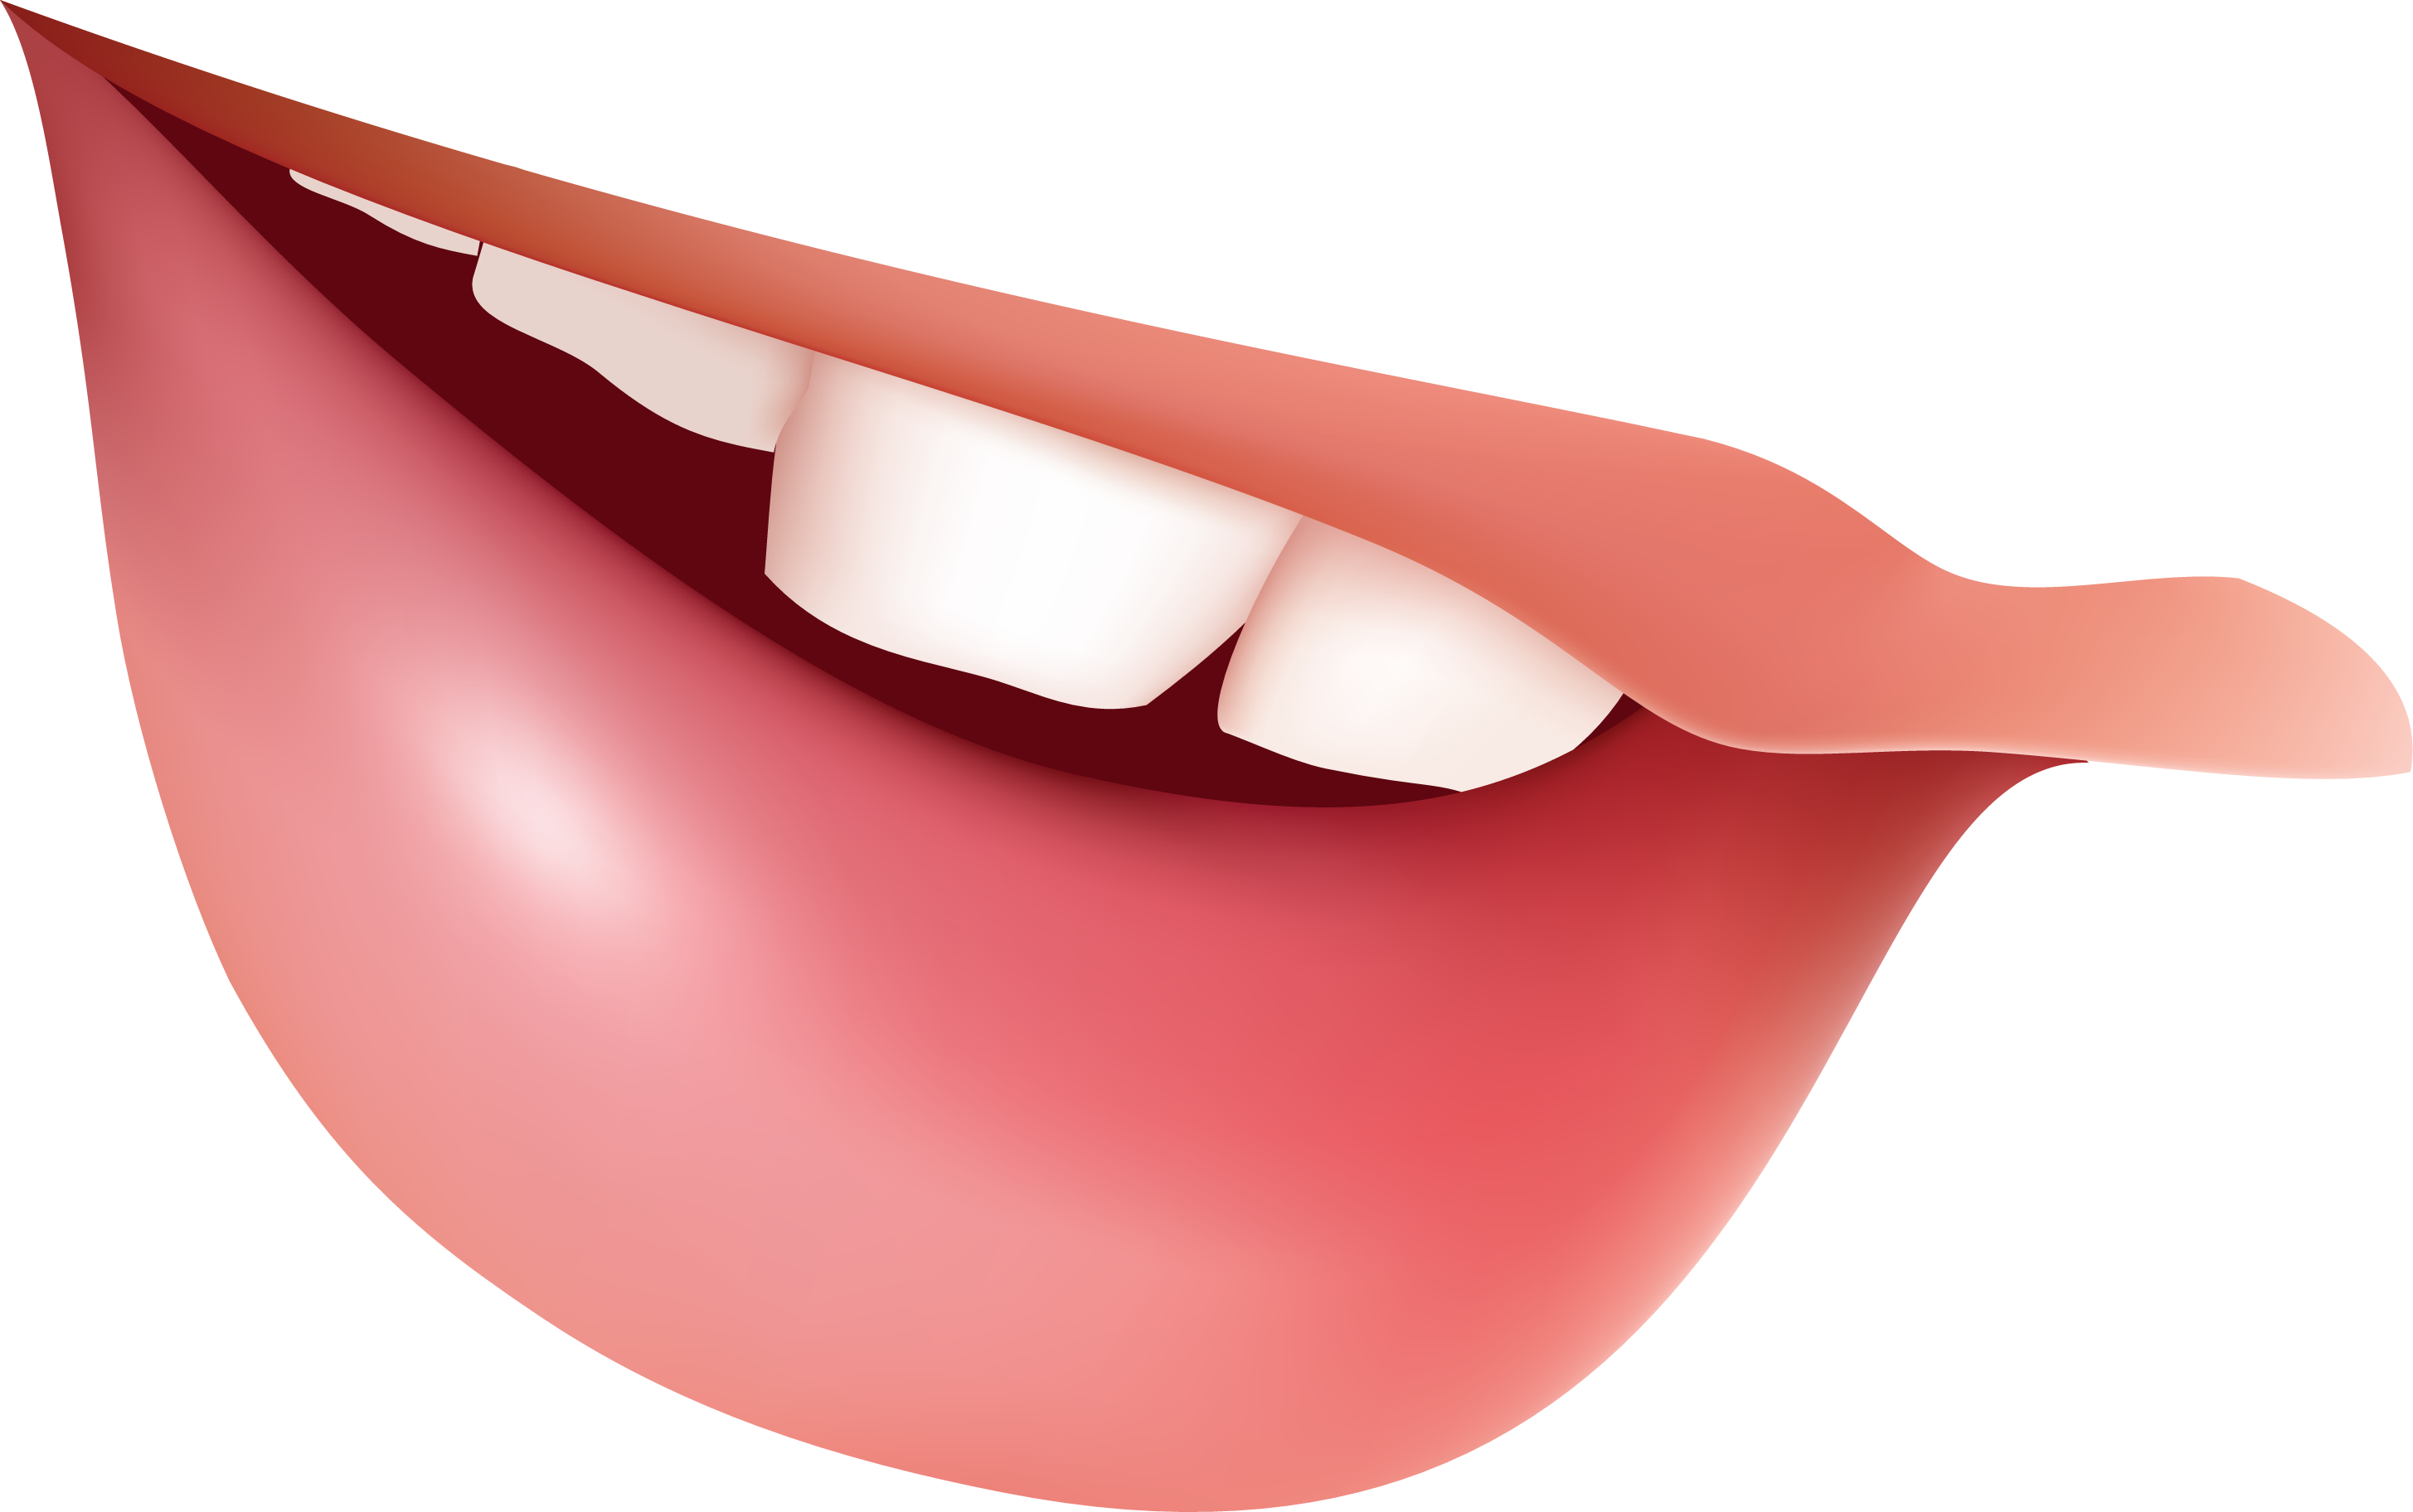 Teeth Transparent Images